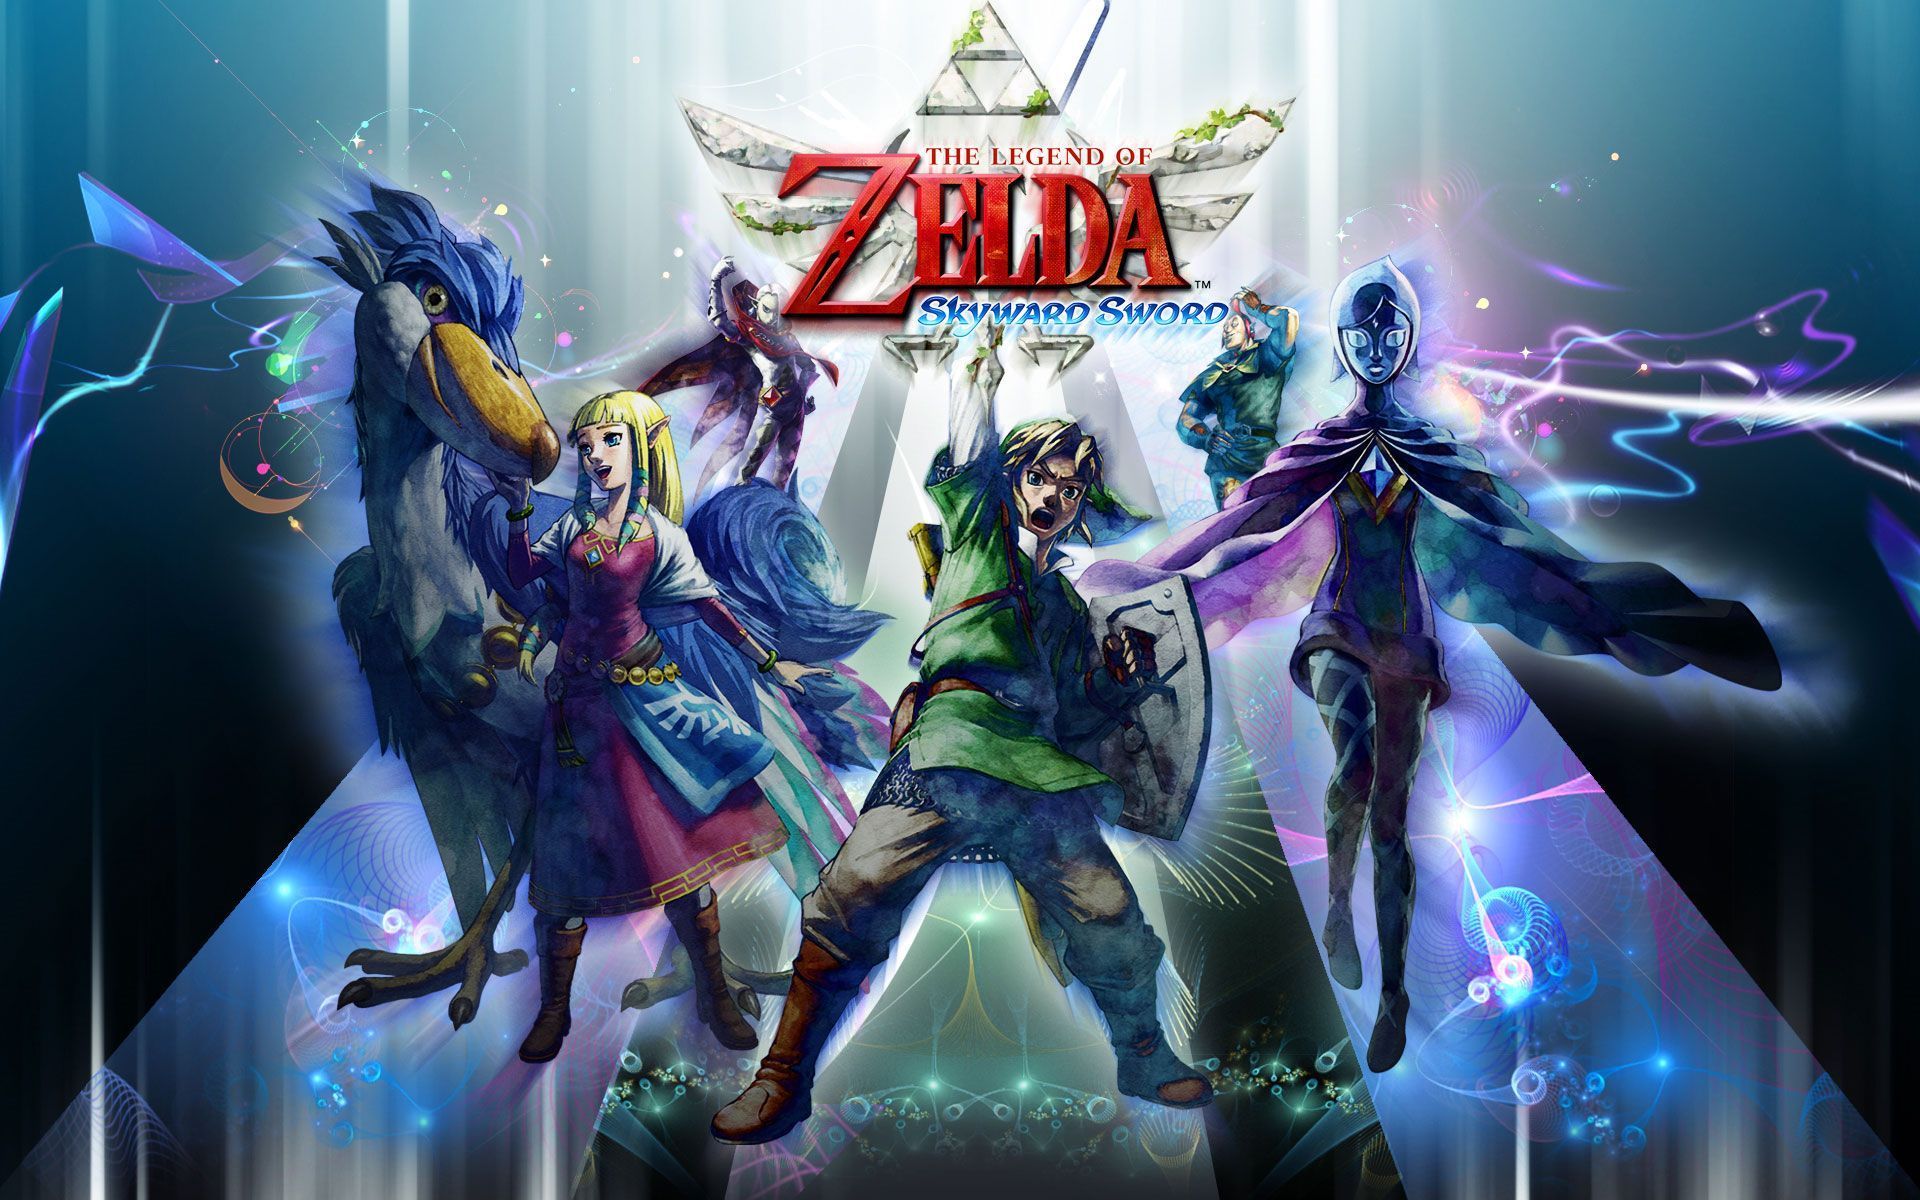 Legend of Zelda Wallpapers HD | Wallpapers, Backgrounds, Images ...